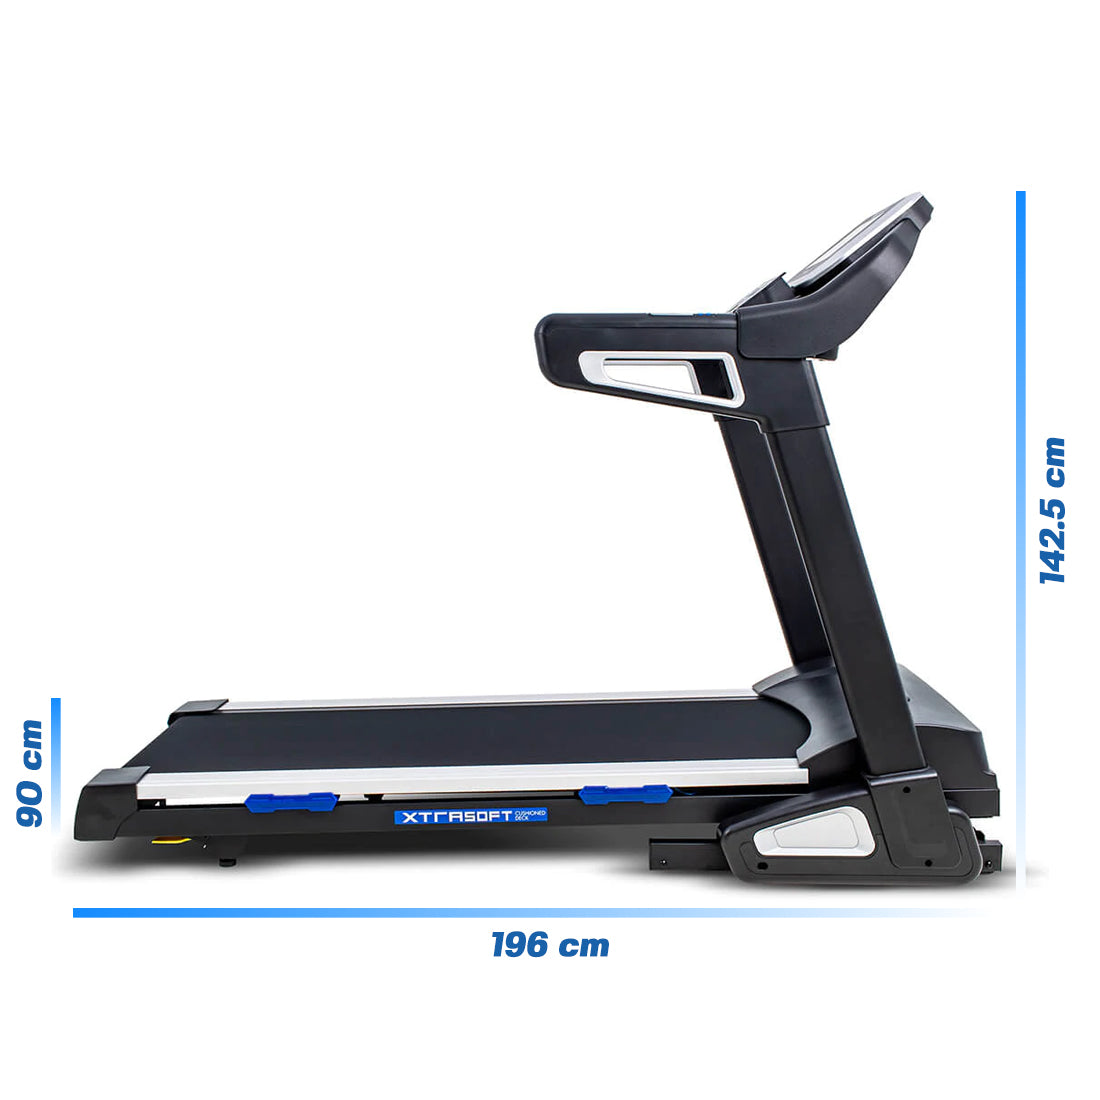 Xterra TRX5500 Treadmill - Touchscreen Display